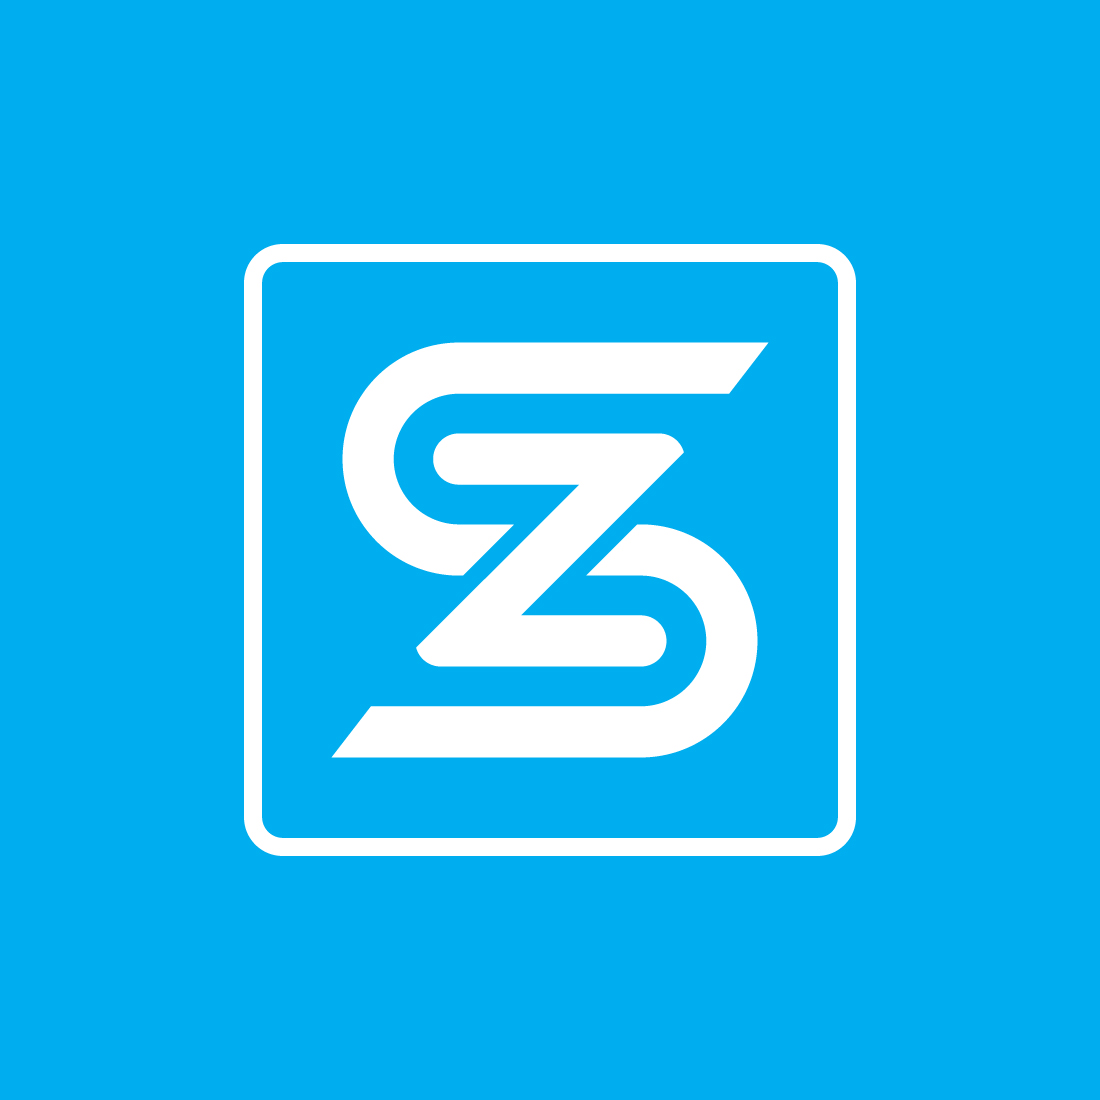 Letter Mark Logo SZ Design cover image.